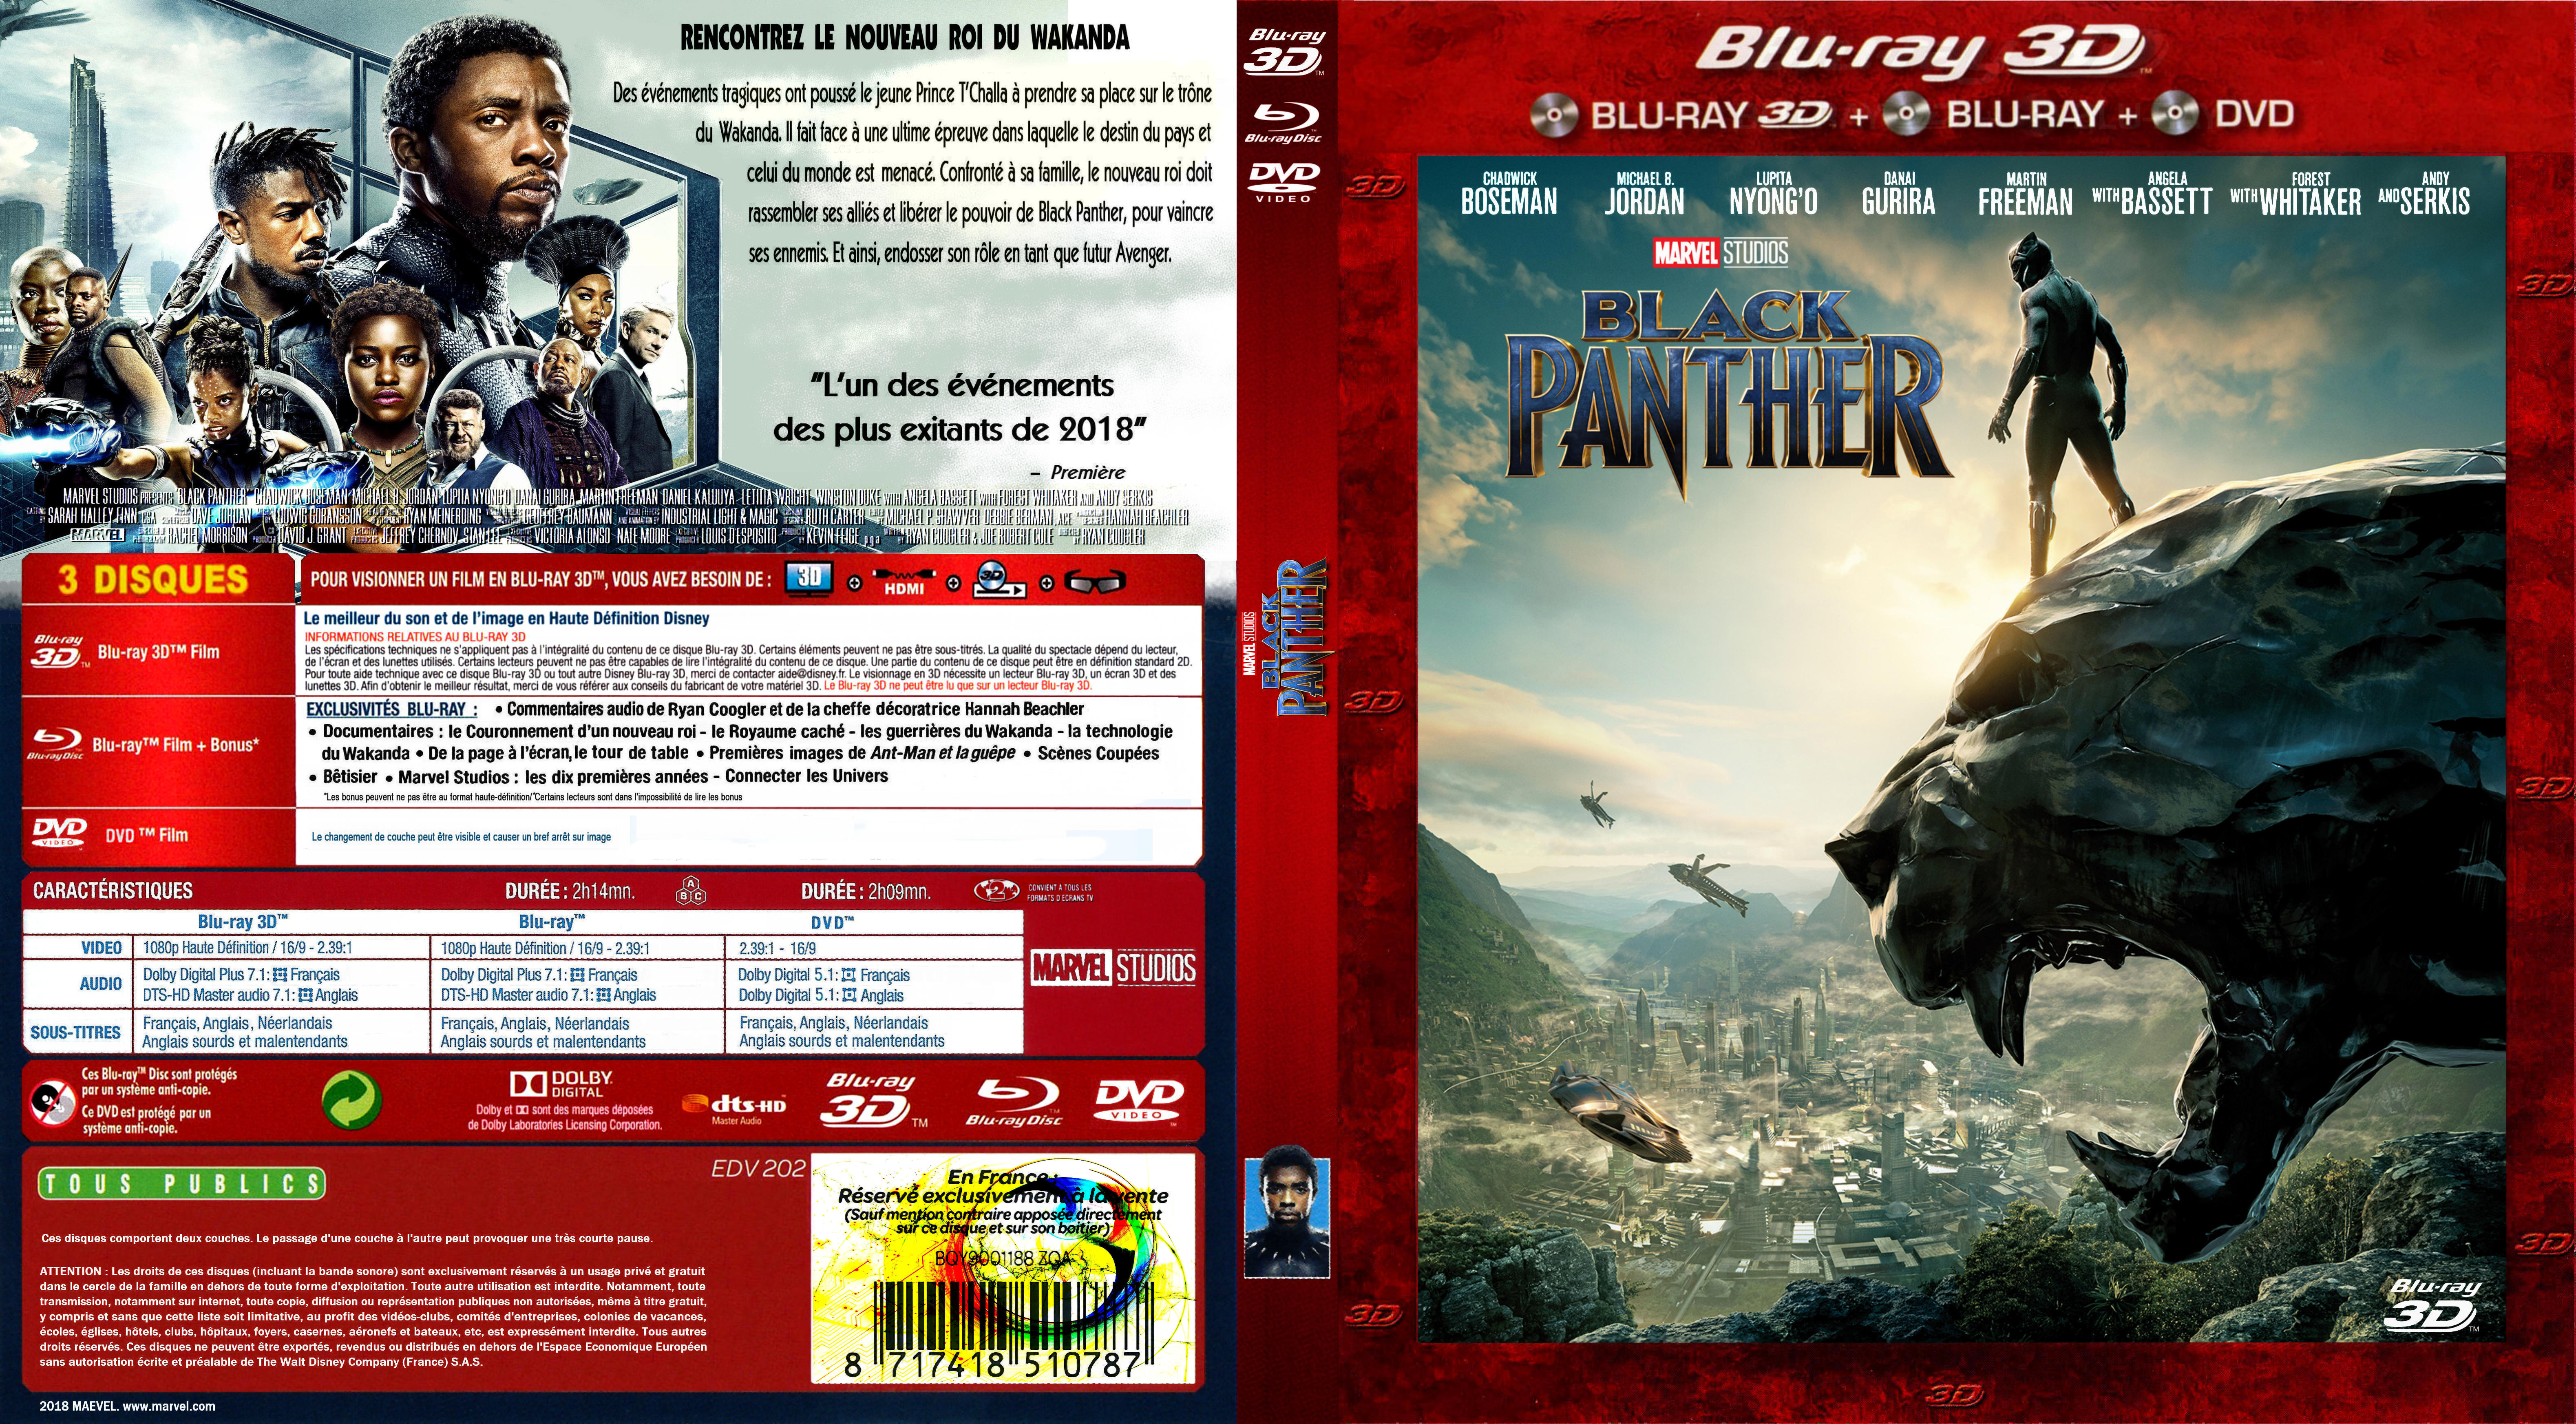 Jaquette DVD Balck Panther 3D custom (BLU-RAY) v2